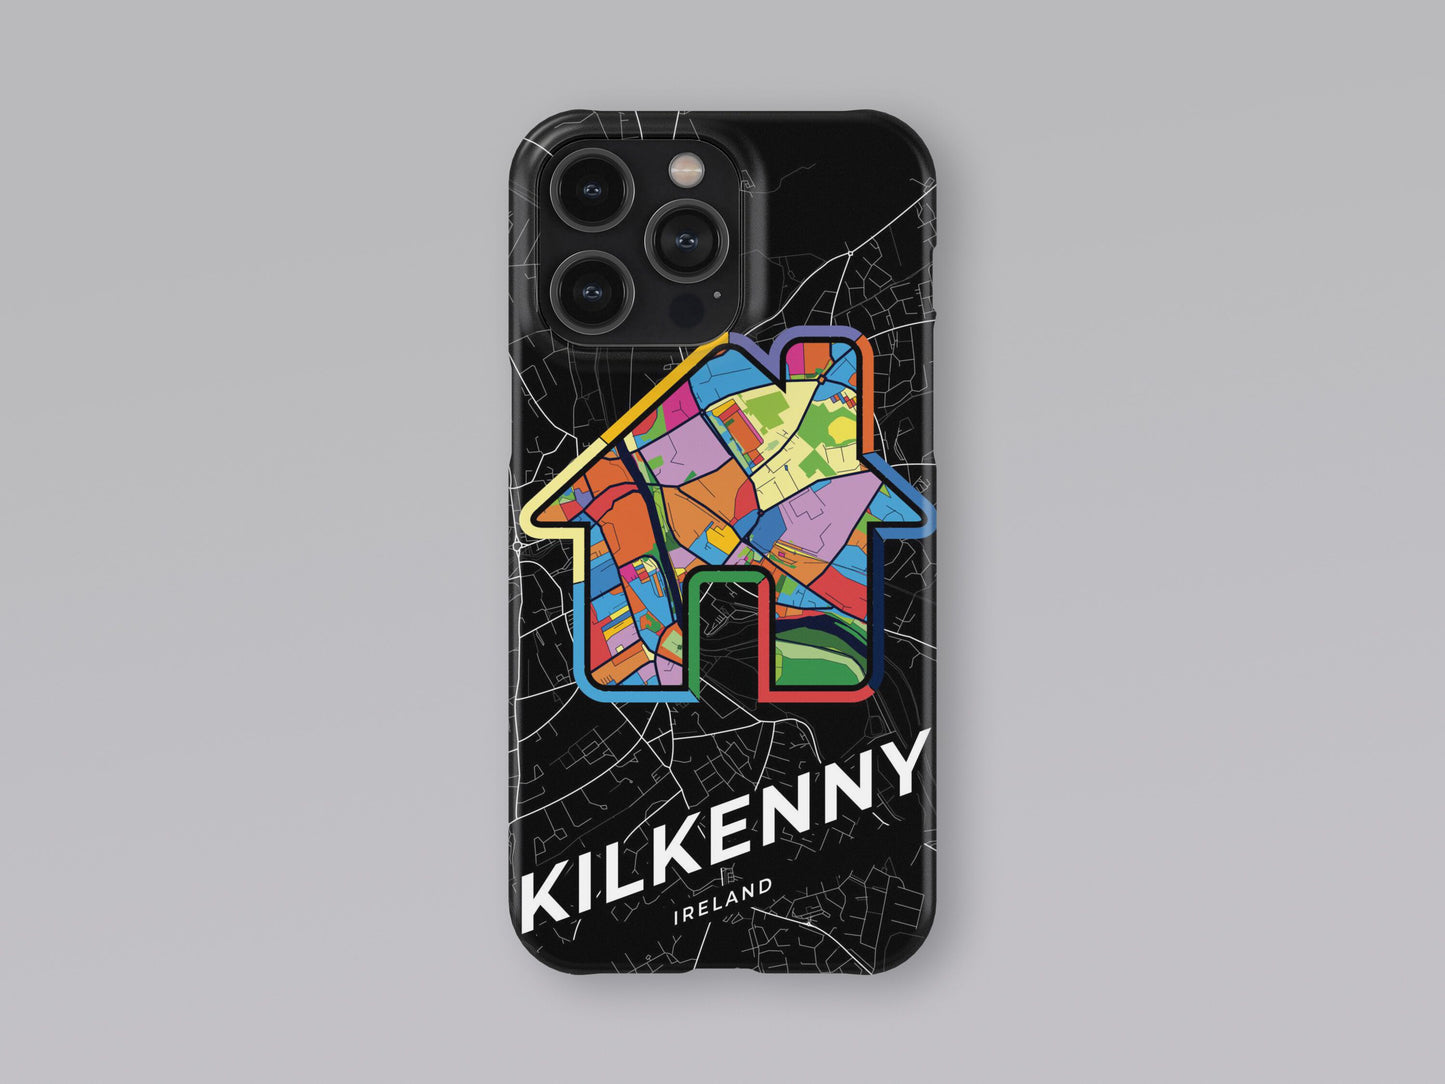 Kilkenny Ireland slim phone case with colorful icon. Birthday, wedding or housewarming gift. Couple match cases. 3